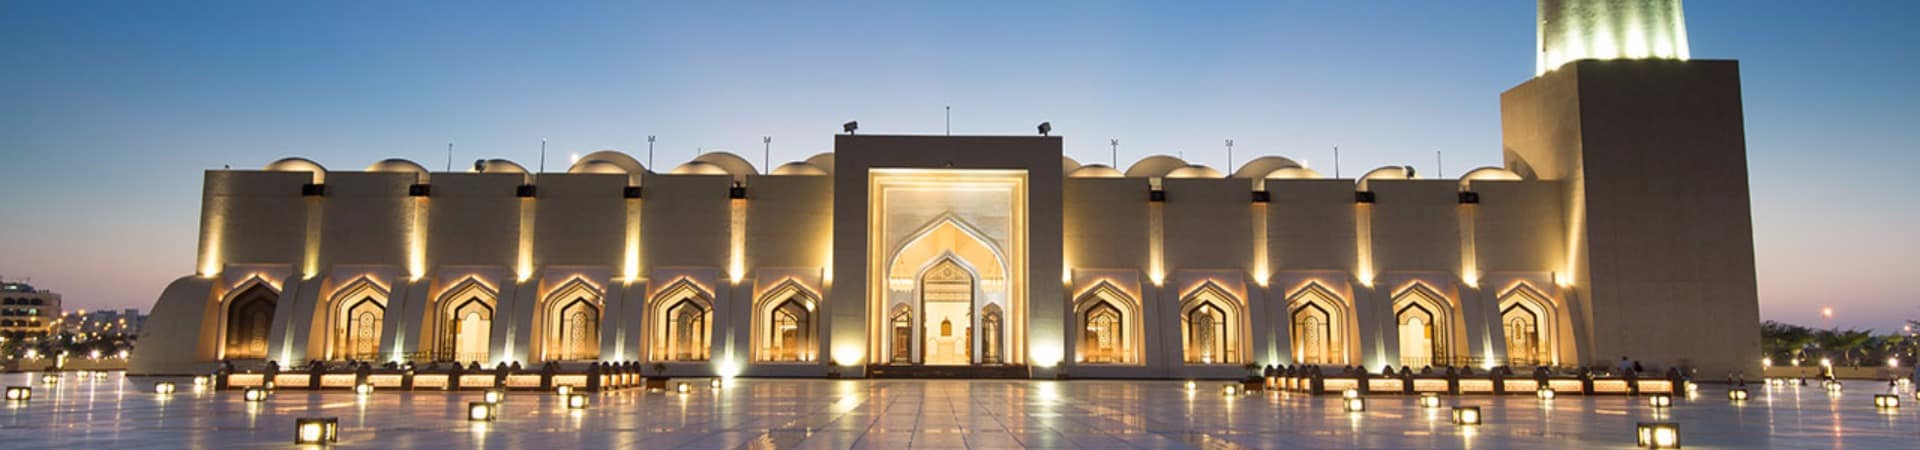 Qatar doha grand mosque